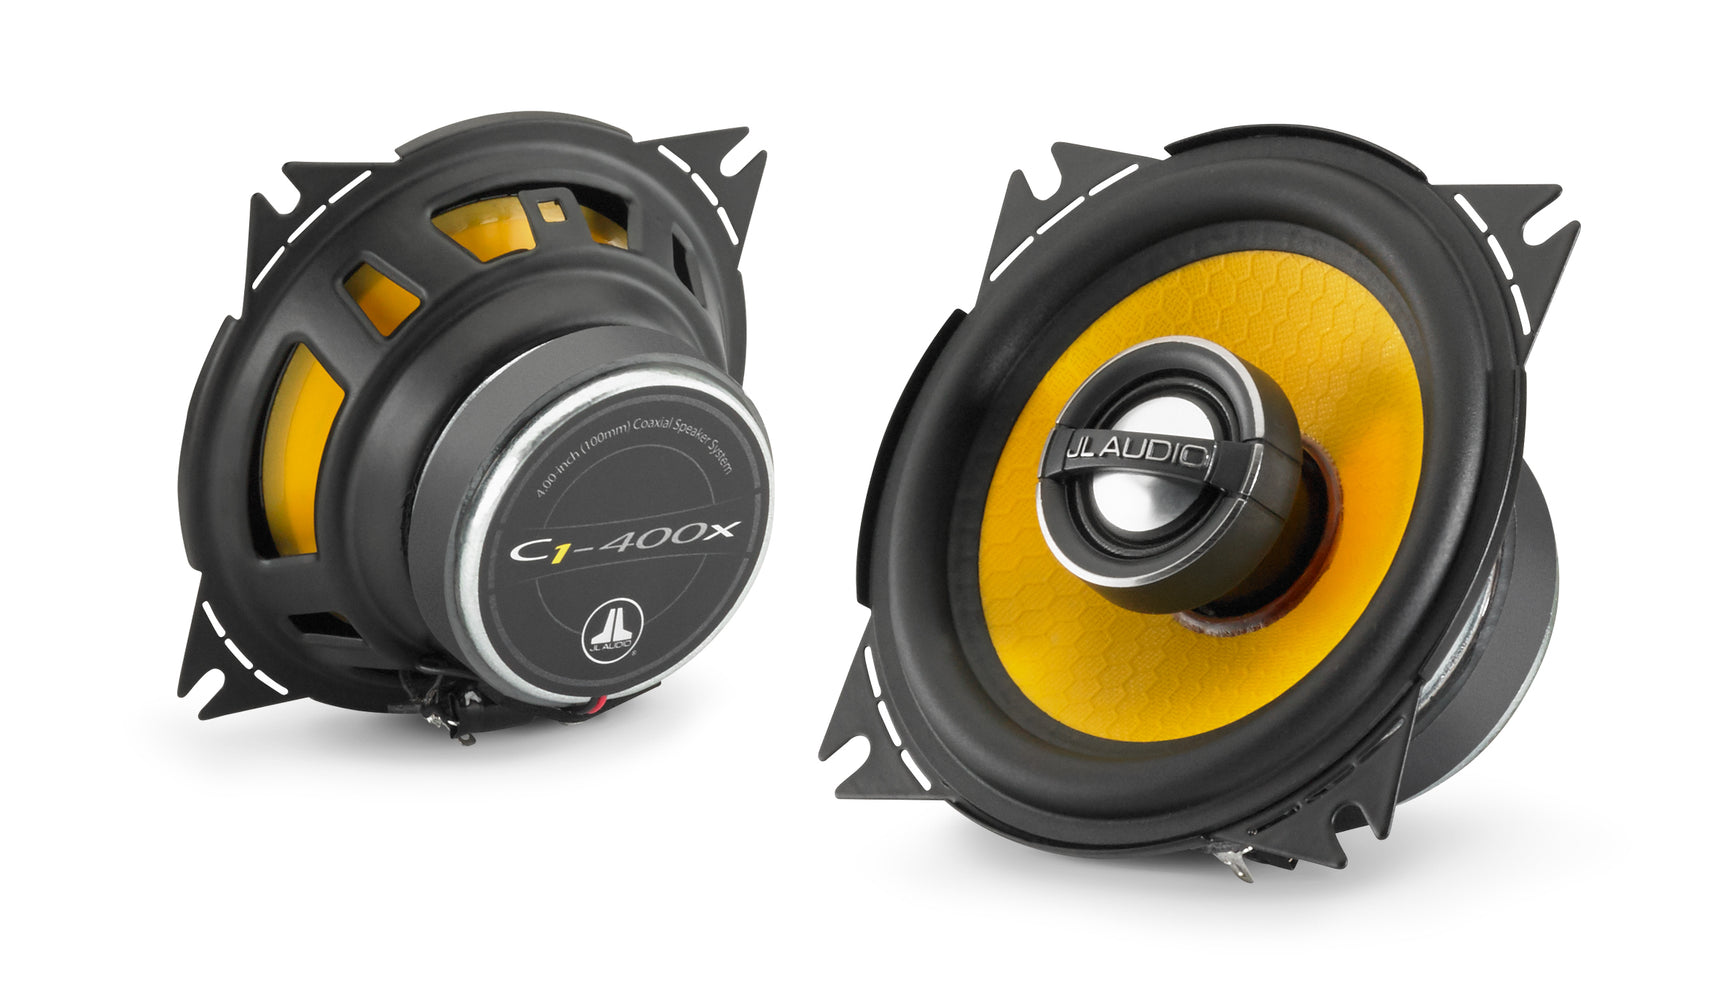 JL Audio C1-400x Coaxial Speaker System: 4" (100 mm) Woofer, 0.75" (19 mm) Aluminium Dome Tweeter (Sold as pair)